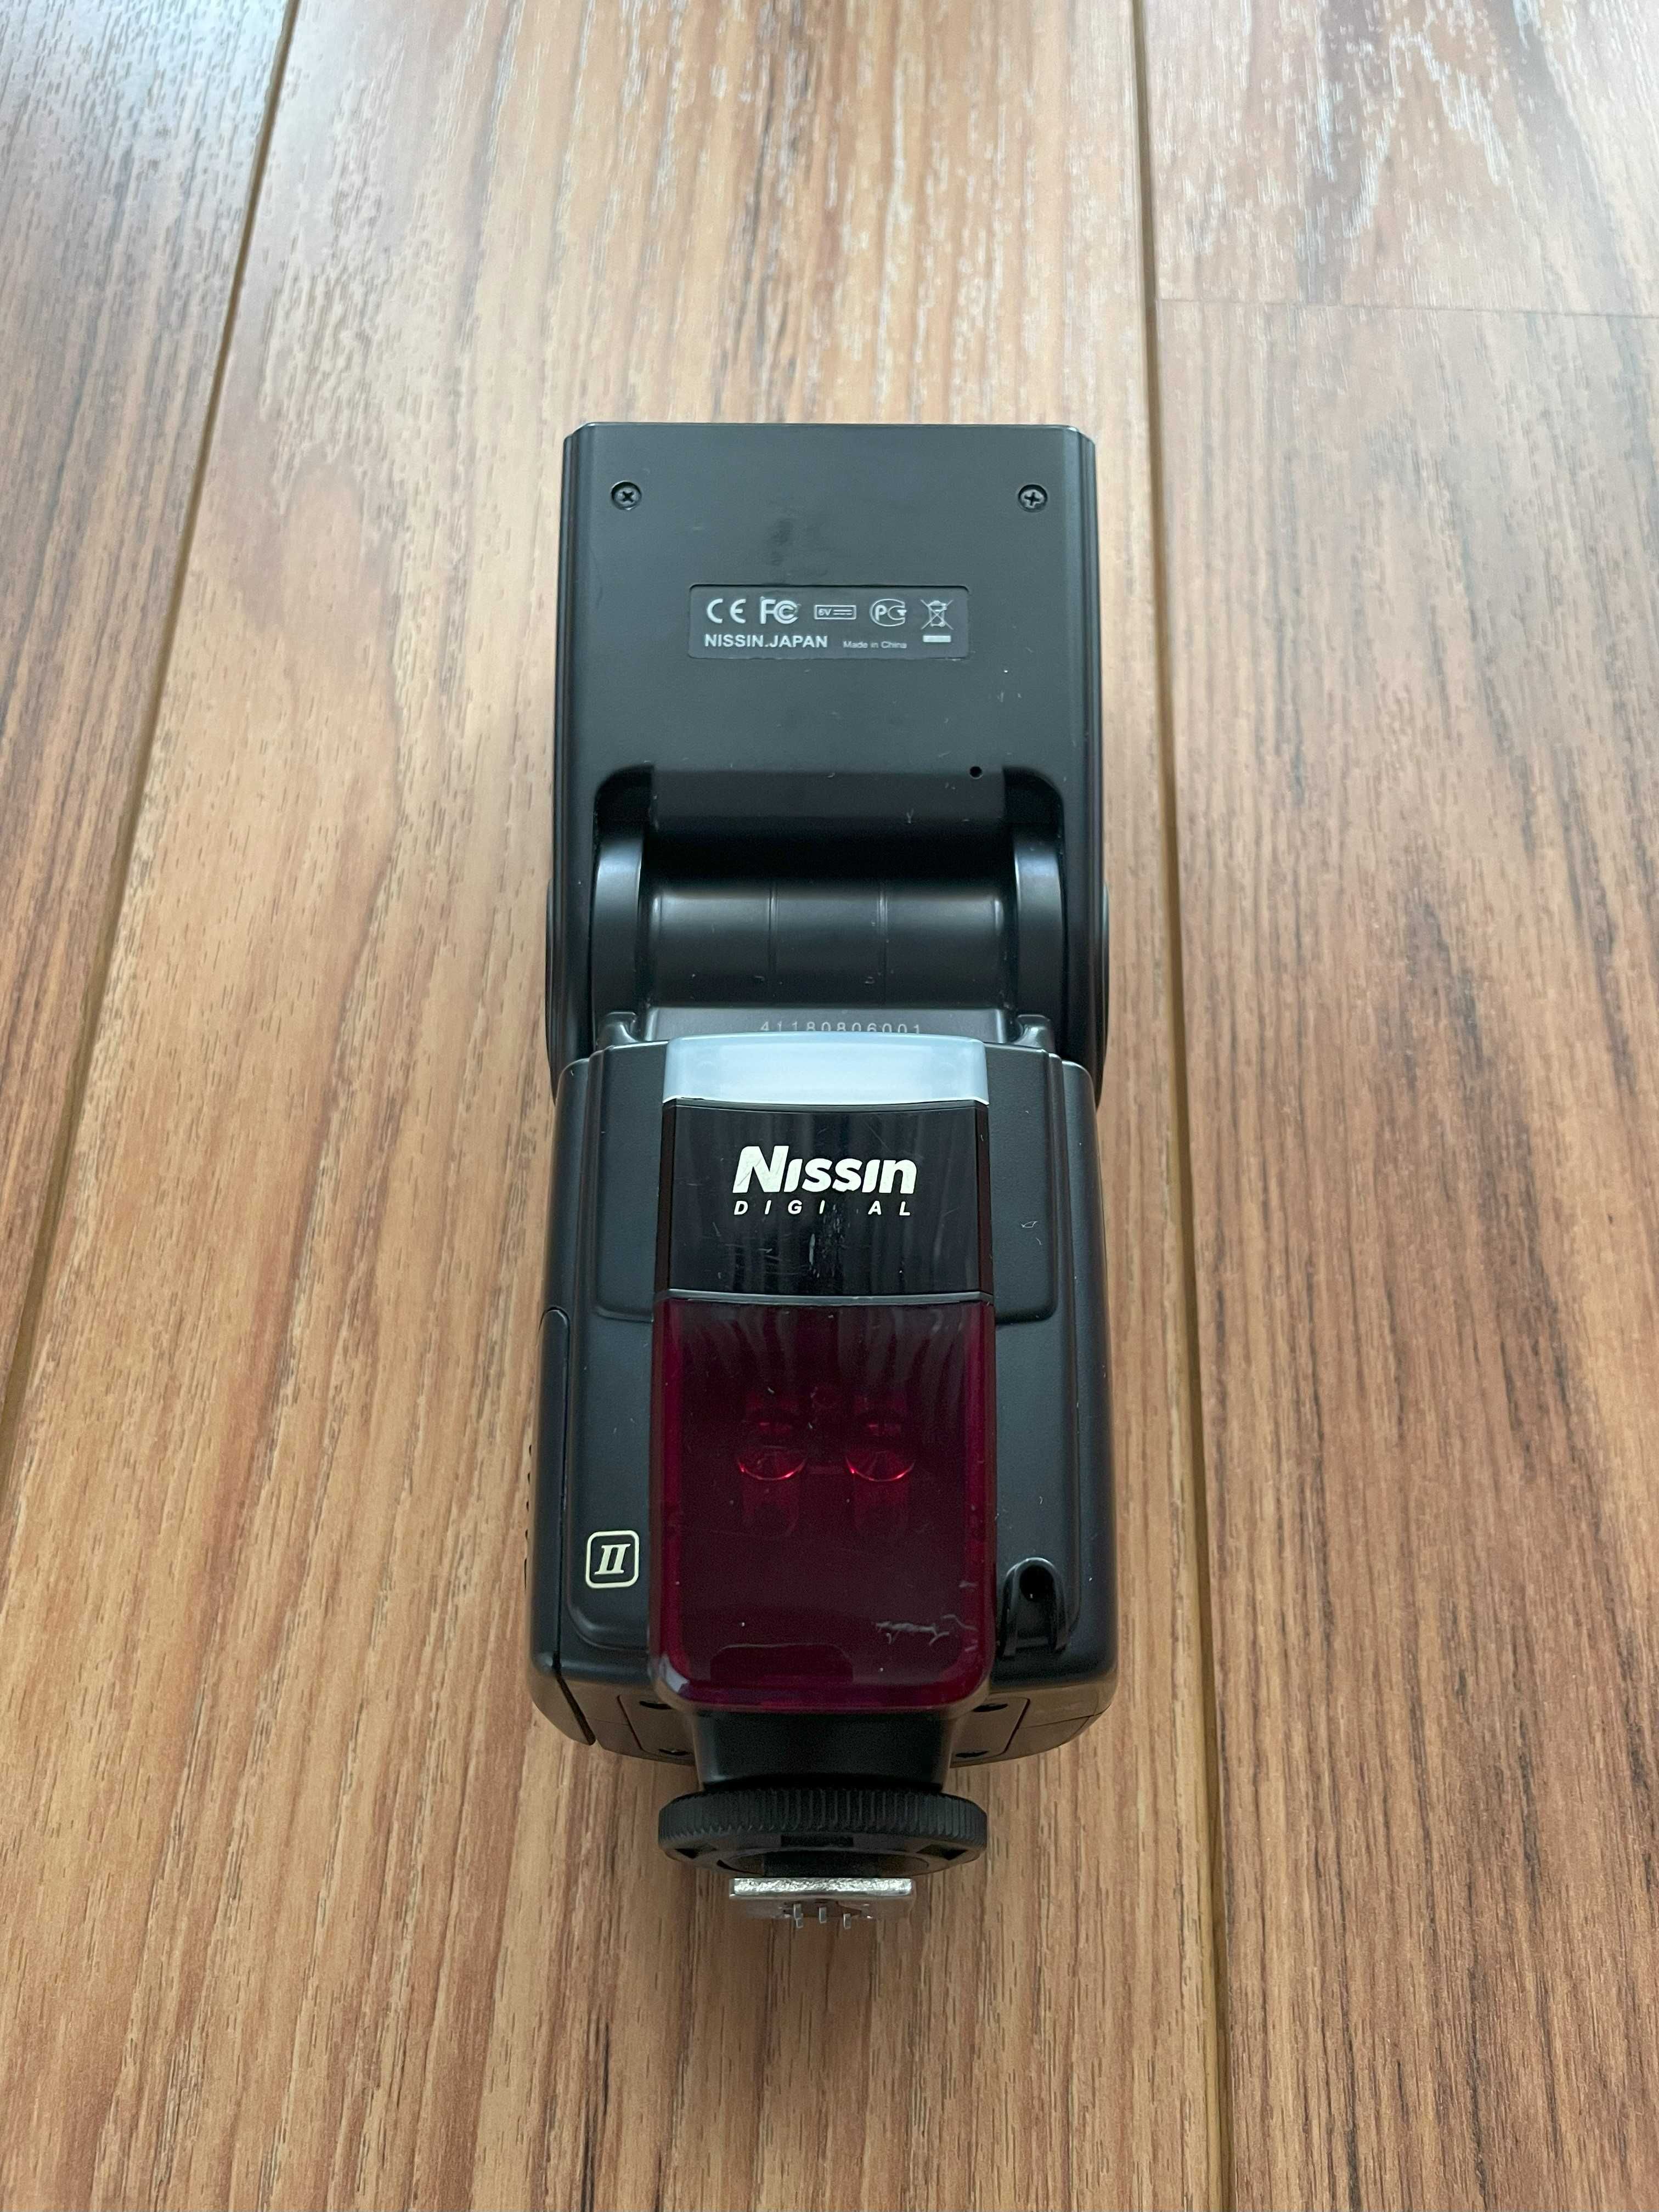 Nissin Flash Di866 Profissional Mark II (Nikon)